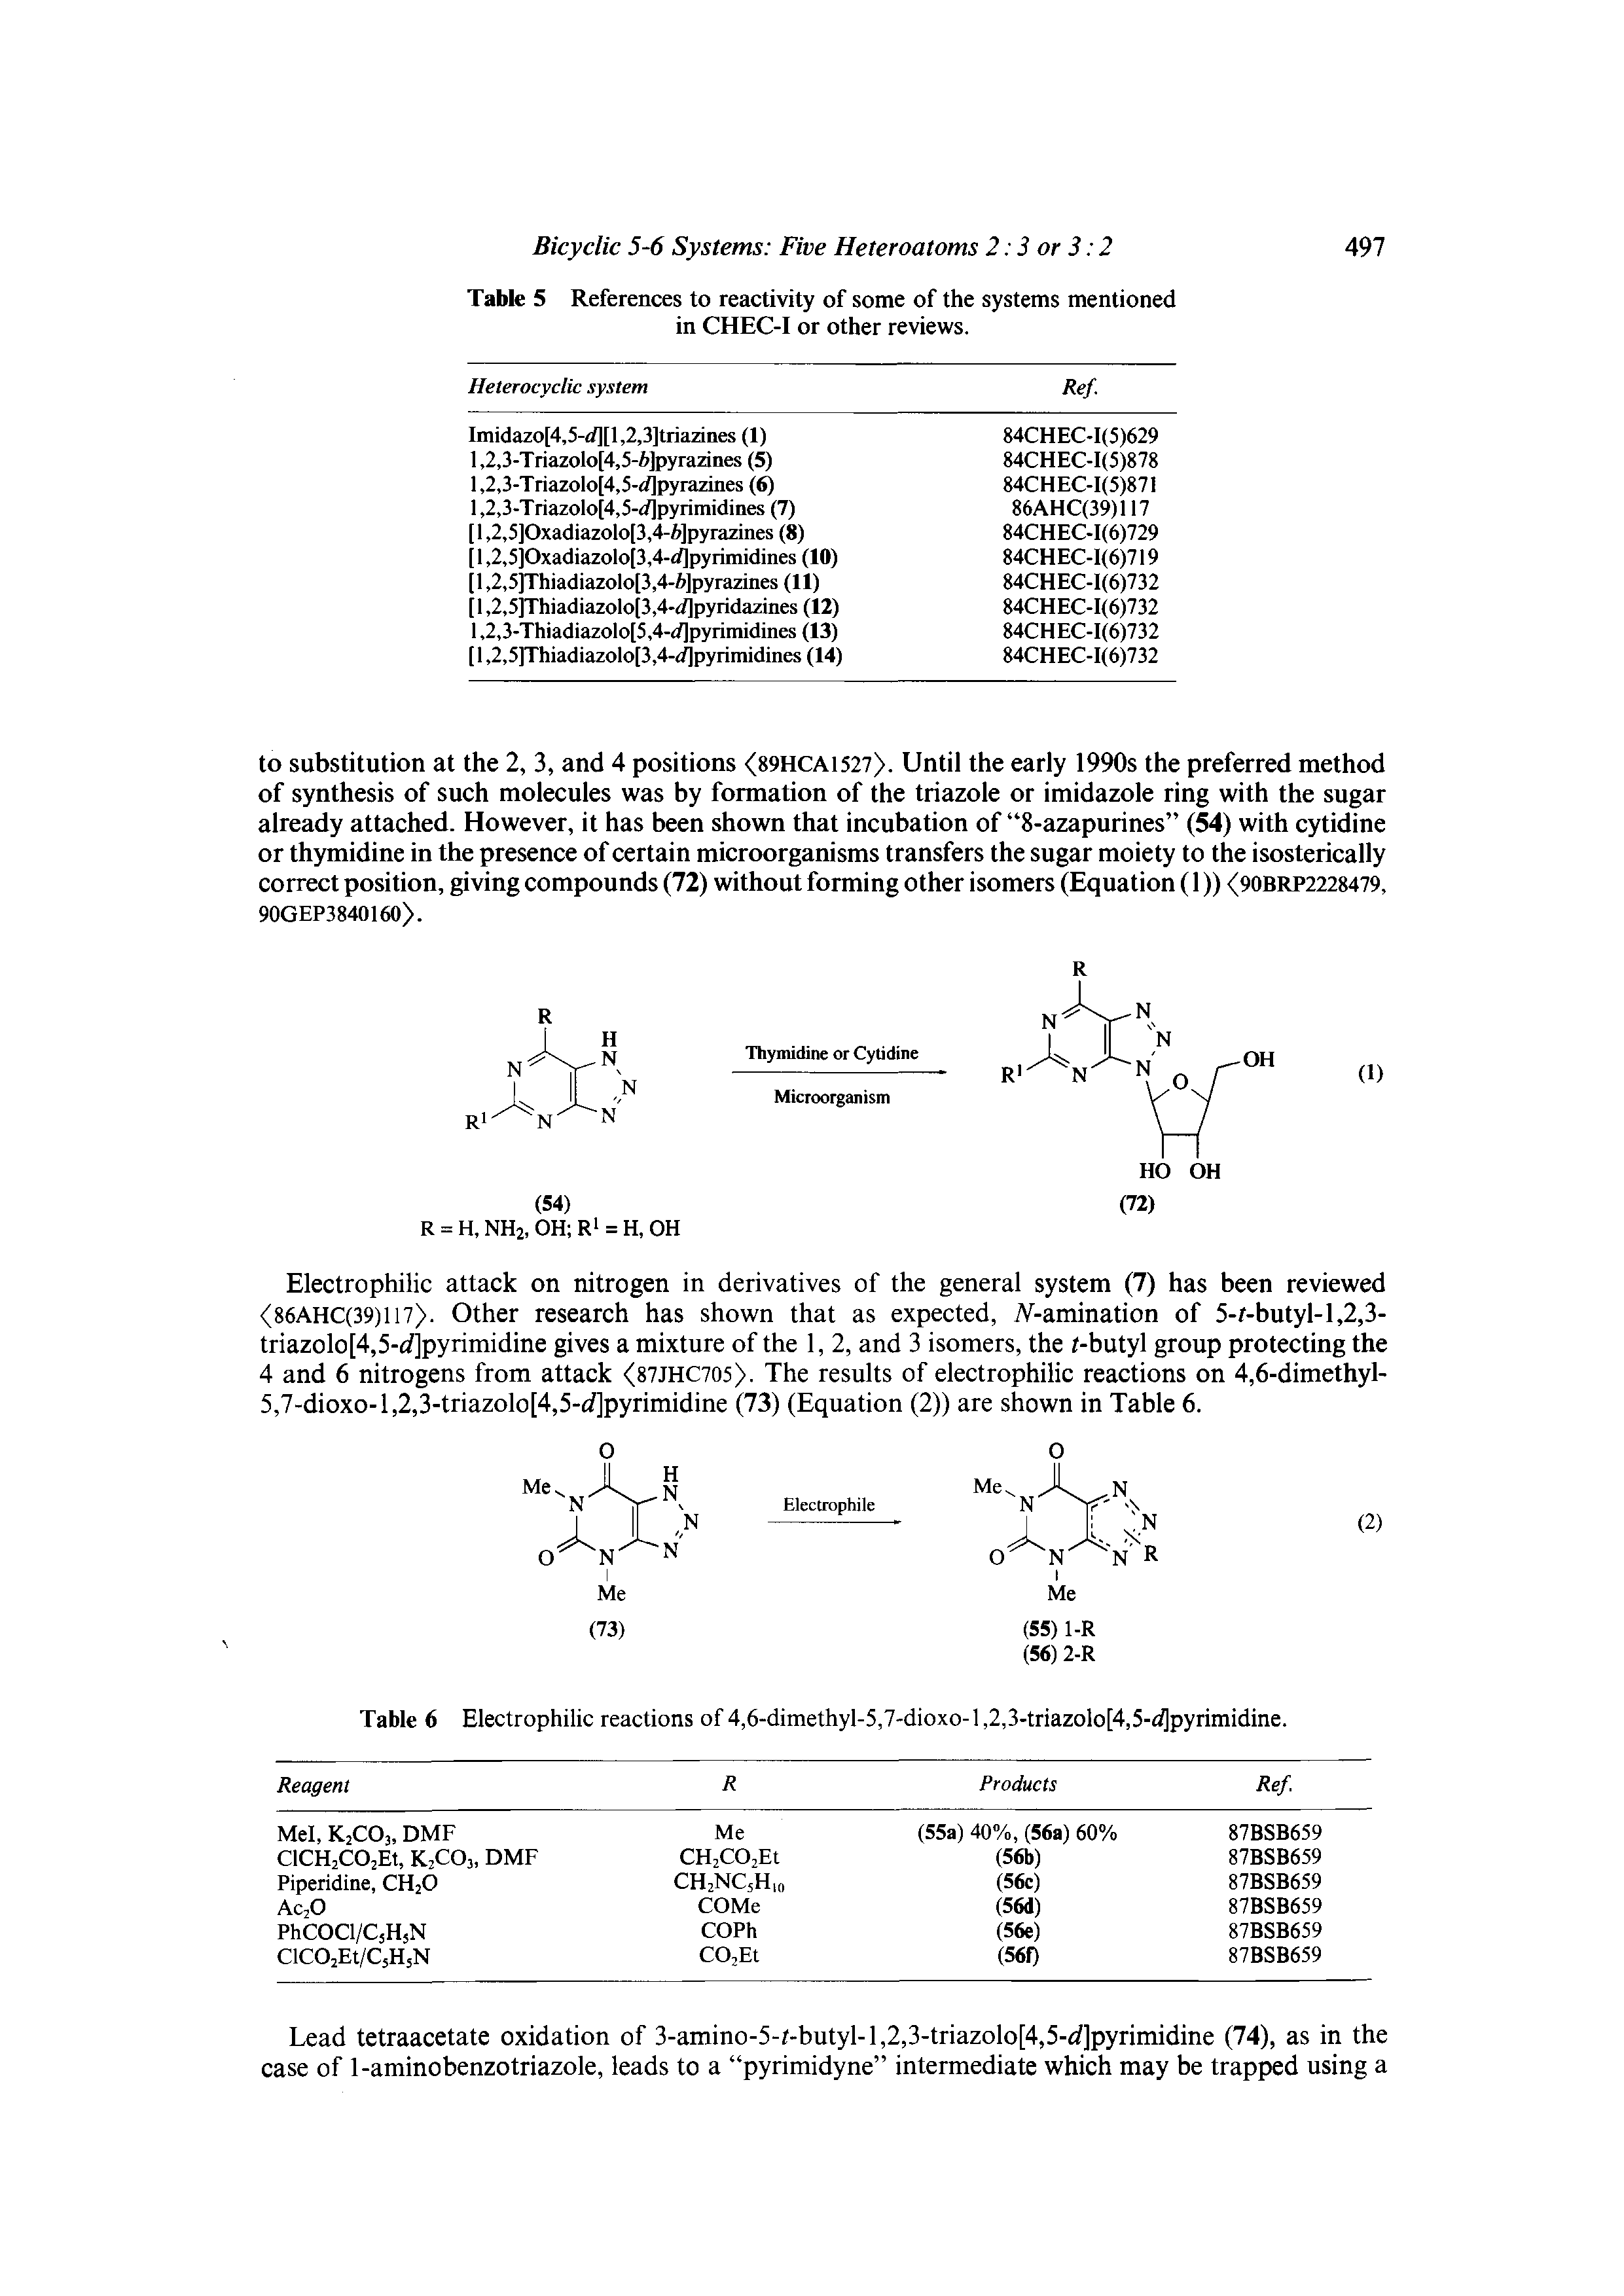 Table 6 Electrophilic reactions of 4,6-dimethyl-5,7-dioxo-l, 2,3-triazolo[4,5-<(]pyrimidine.